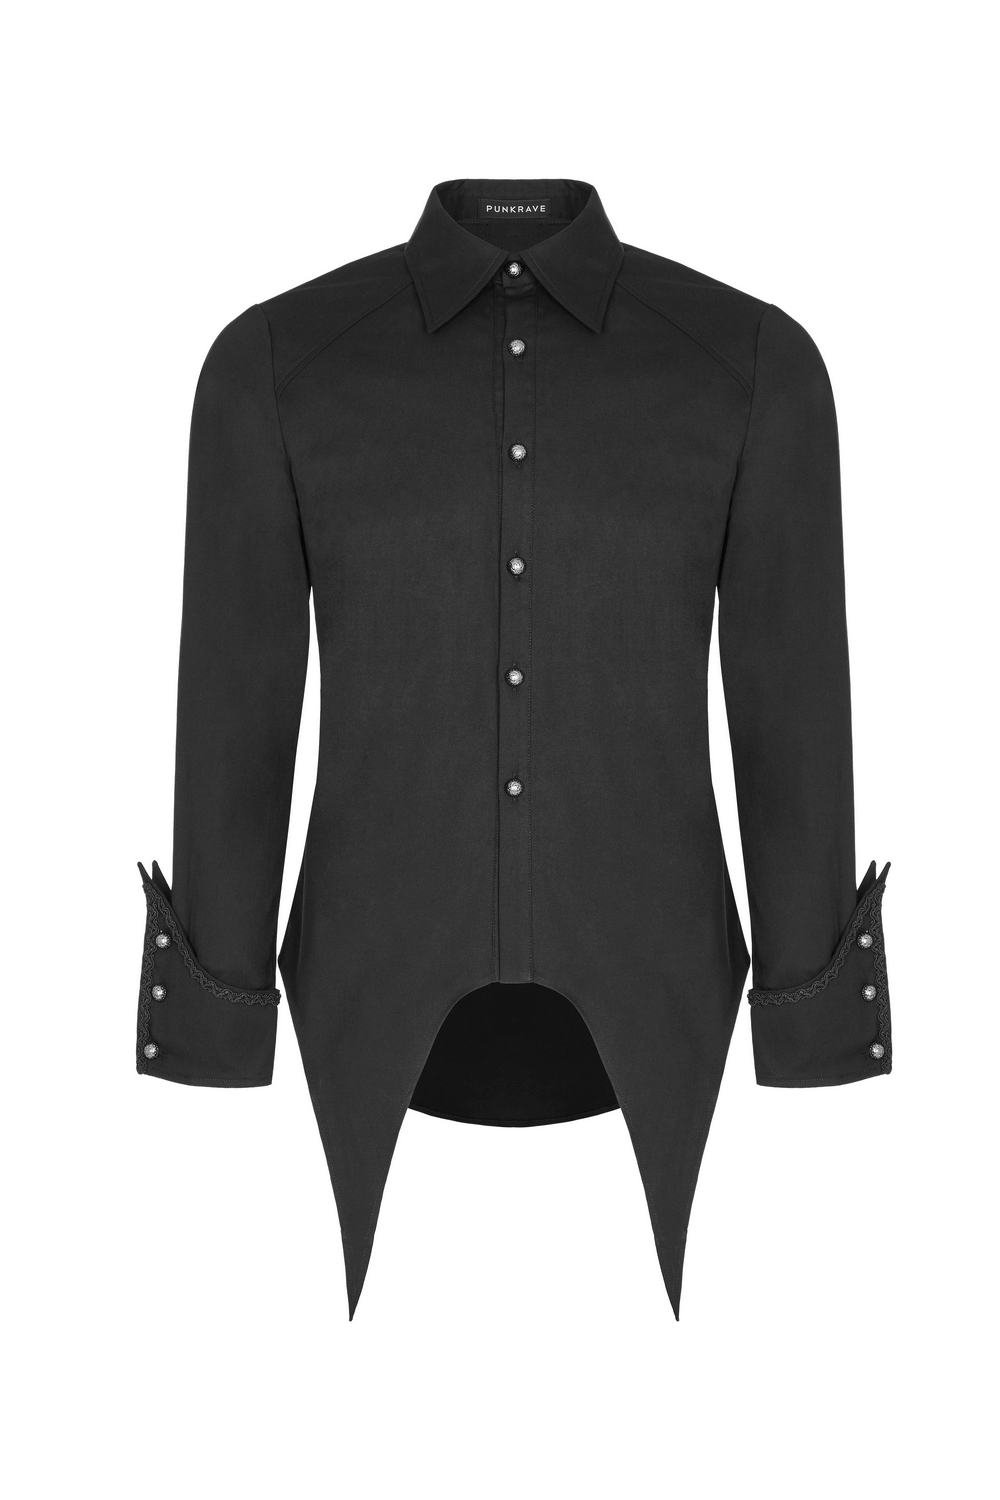 Stylish Male Gothic Shirt with Metal Buckle Cuffs - HARD'N'HEAVY